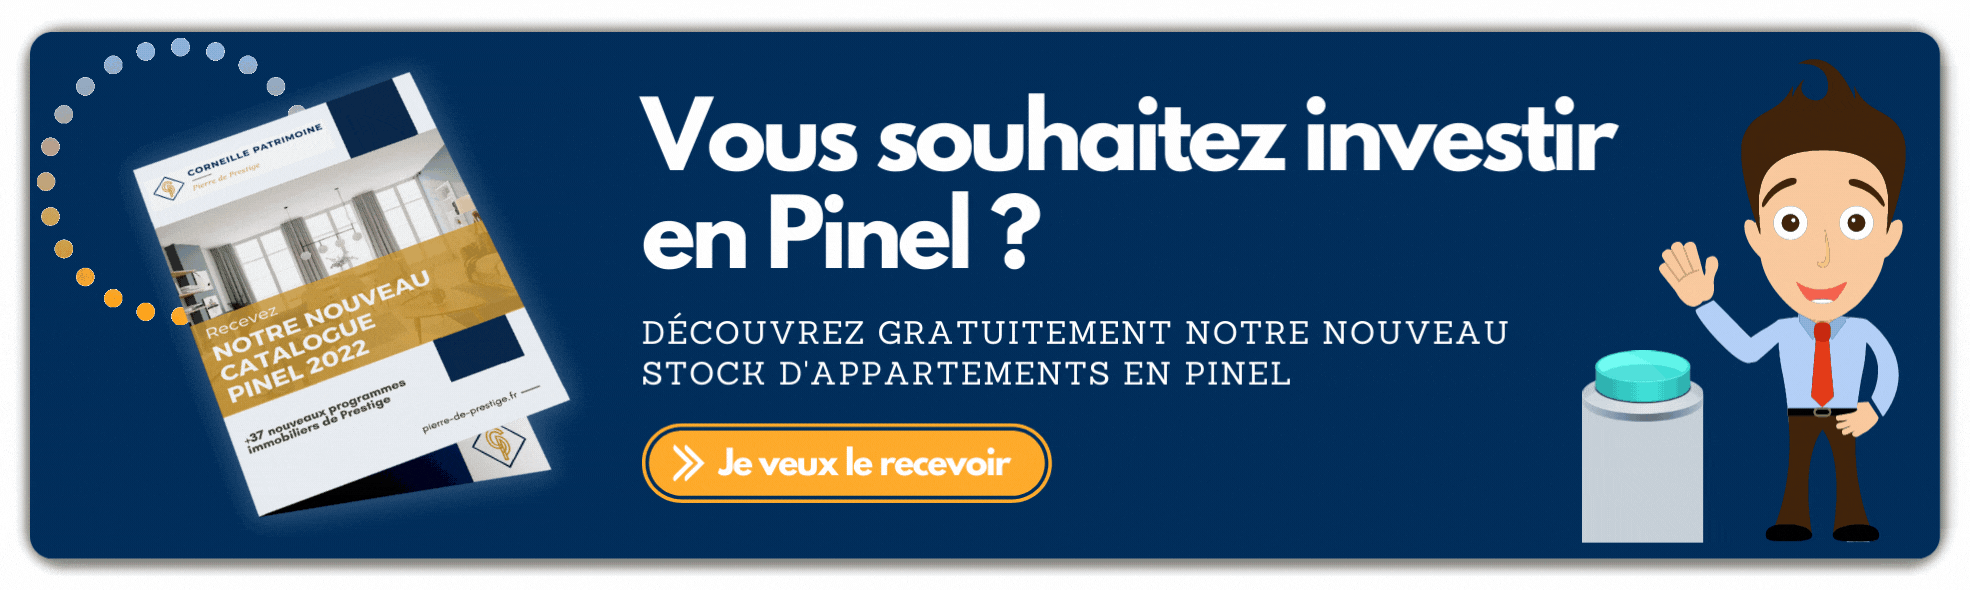 corneille-patrimoine-investir-loi-pinel